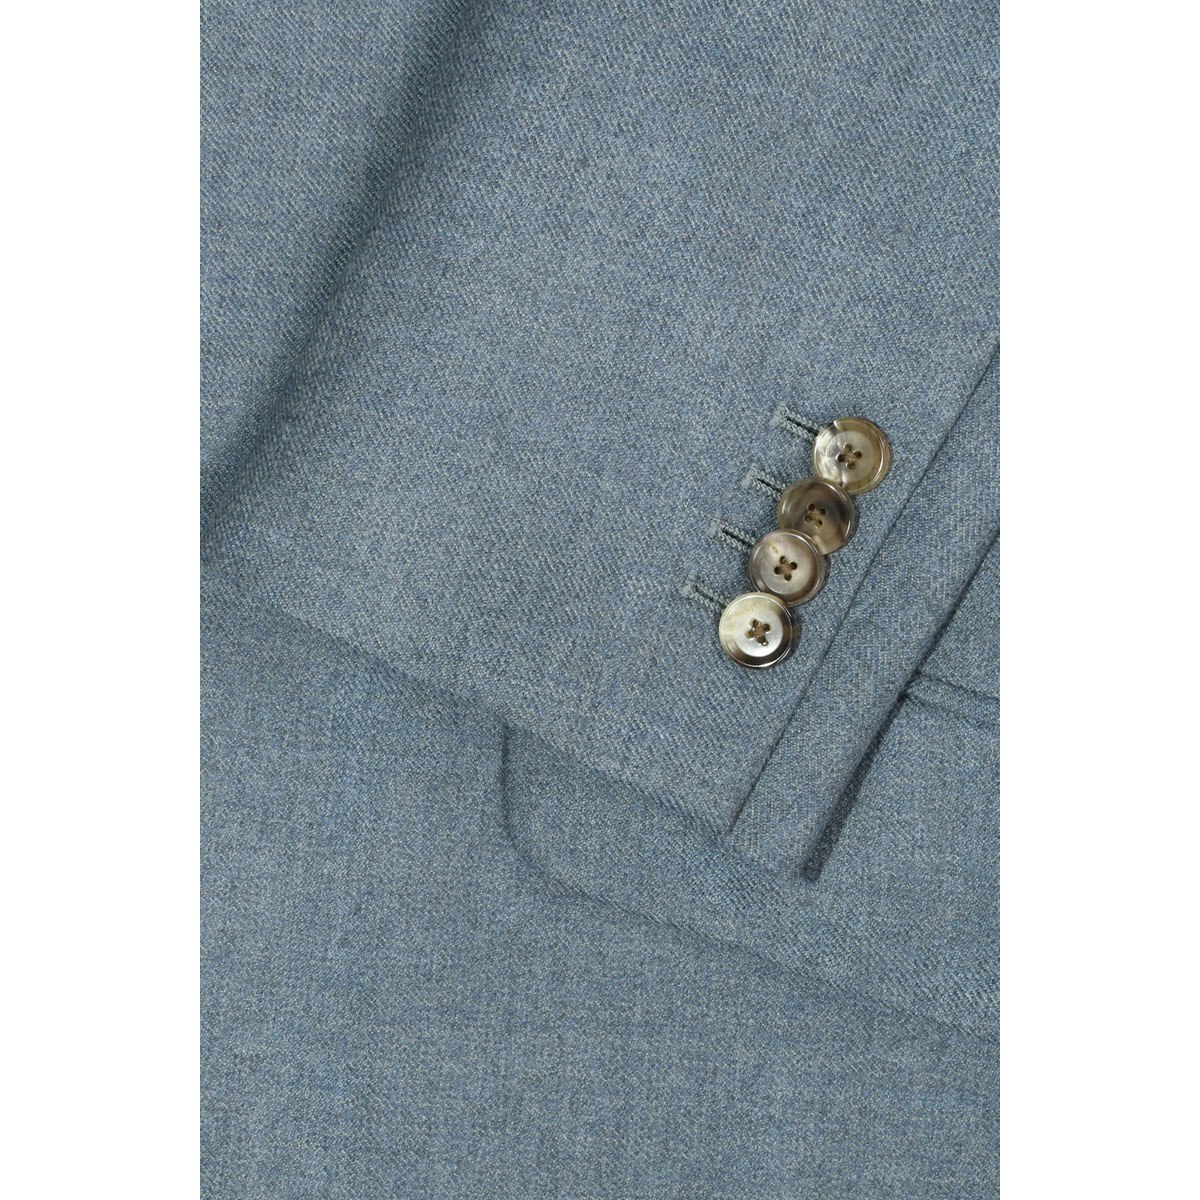 InStitchu Washed Slate Blue Overcoat Sleeve Detail